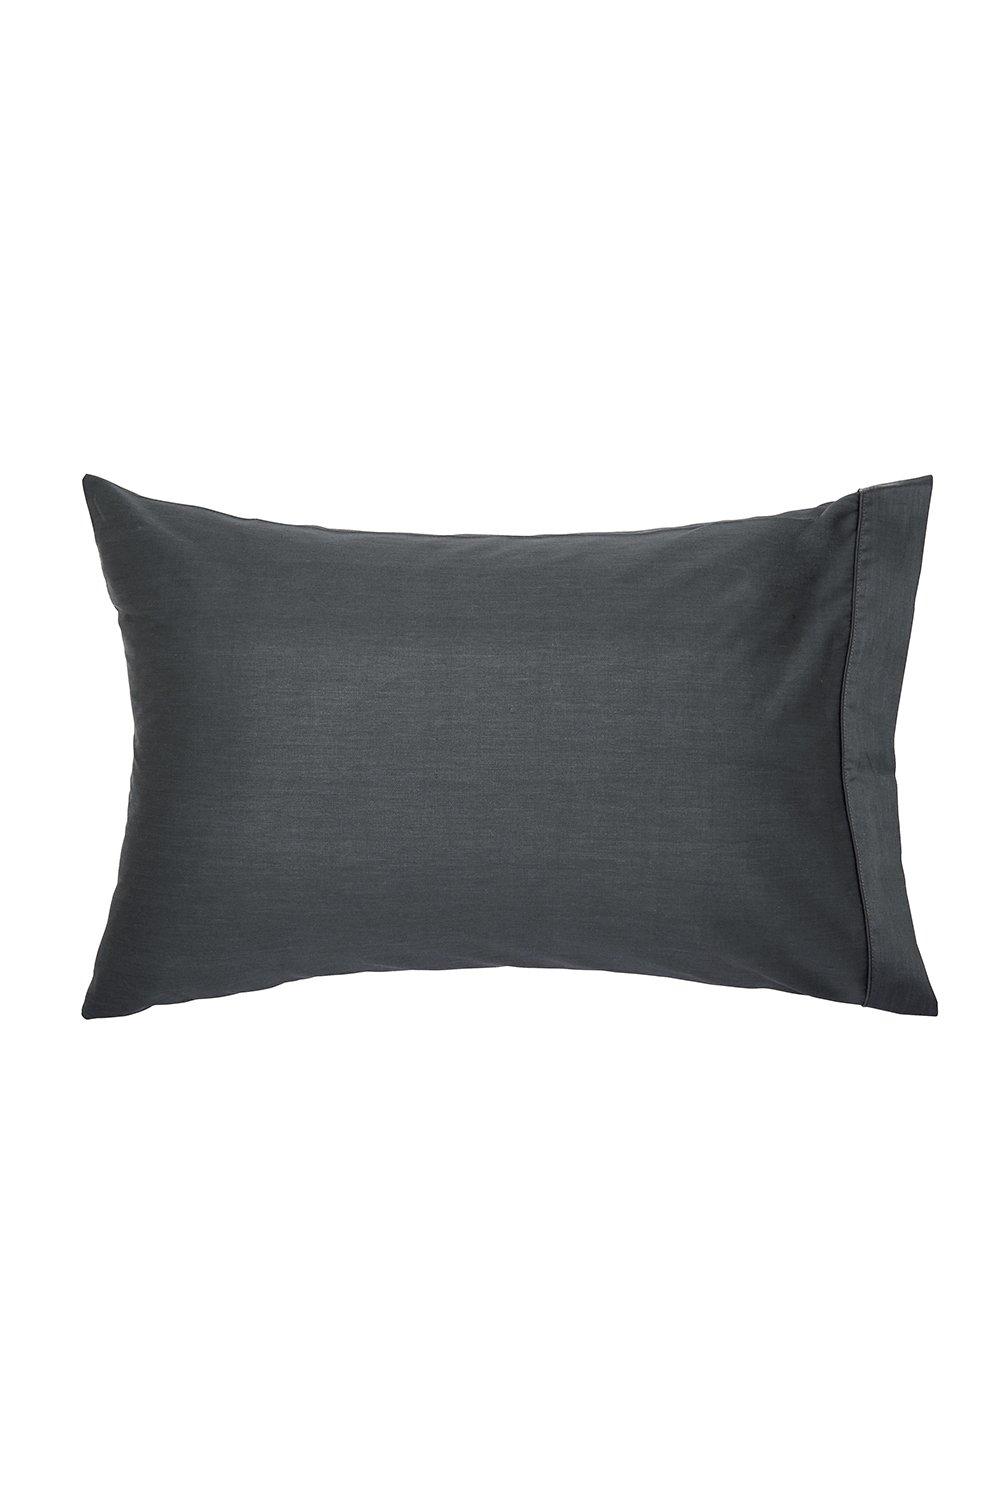 'Richmond Park' Egyptian Cotton Standard Pillowcase